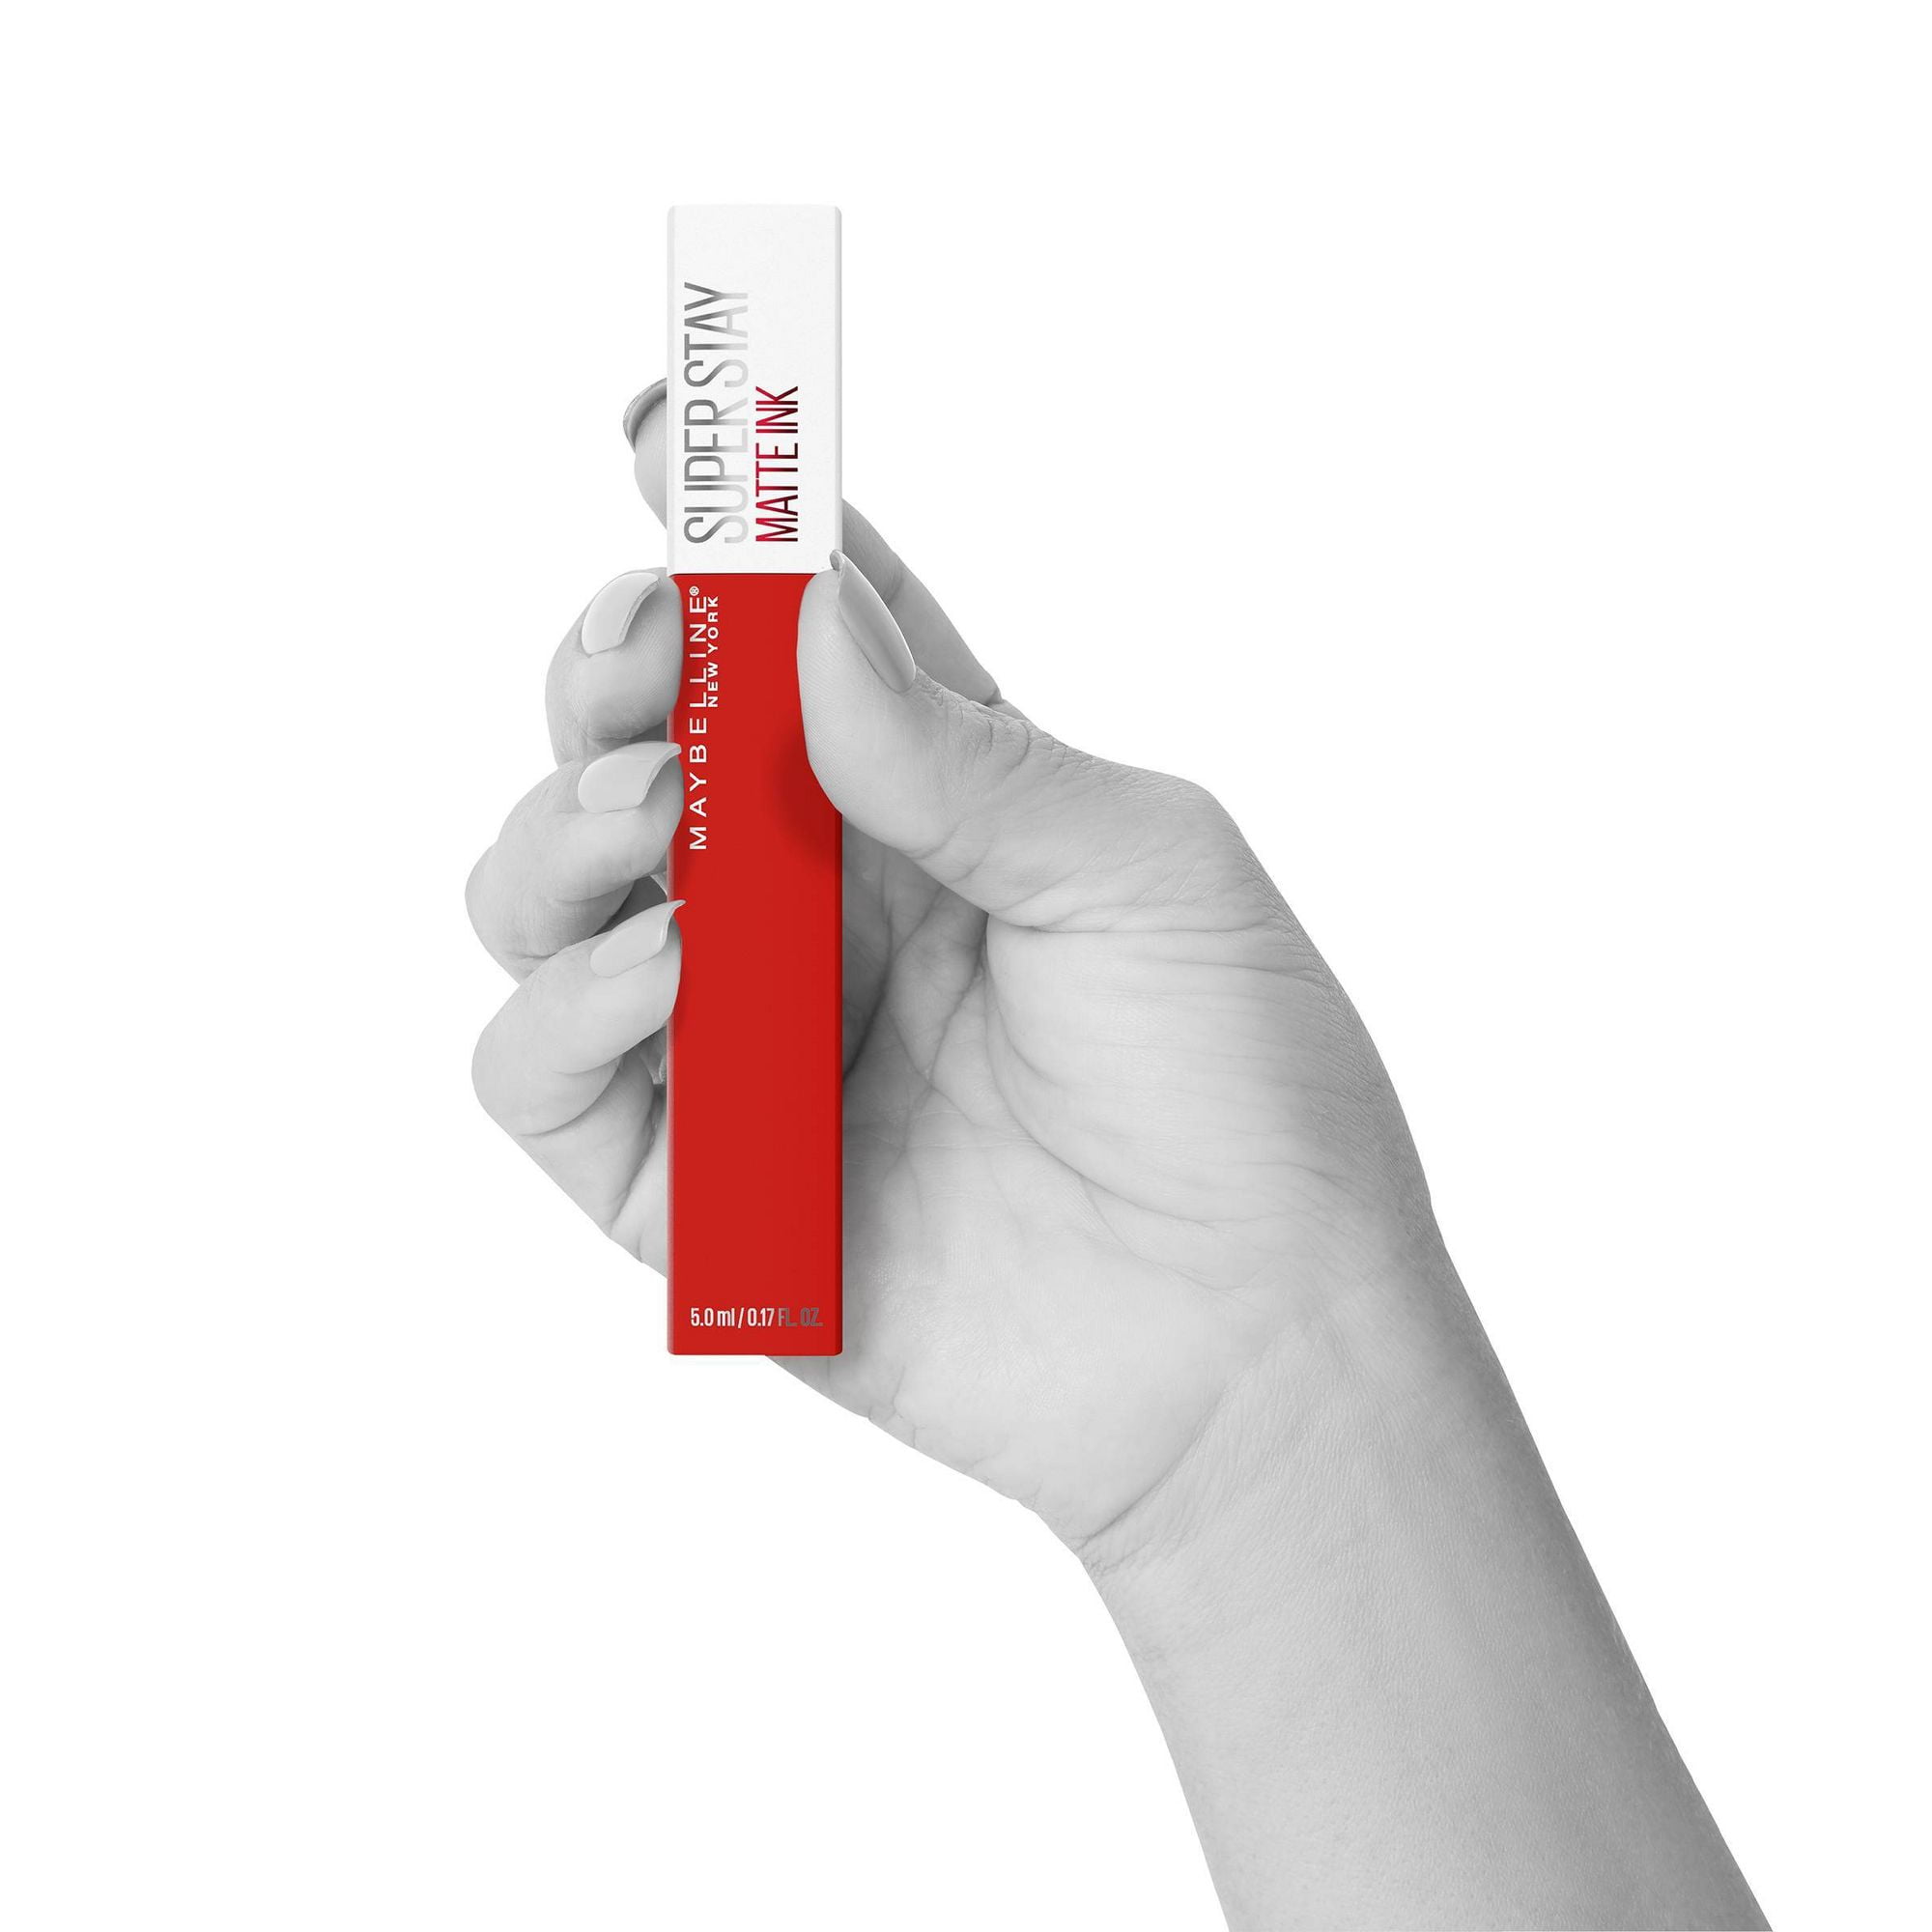 Super Ink Maybelline Innovator Lipstick, Matte Liquid Stay